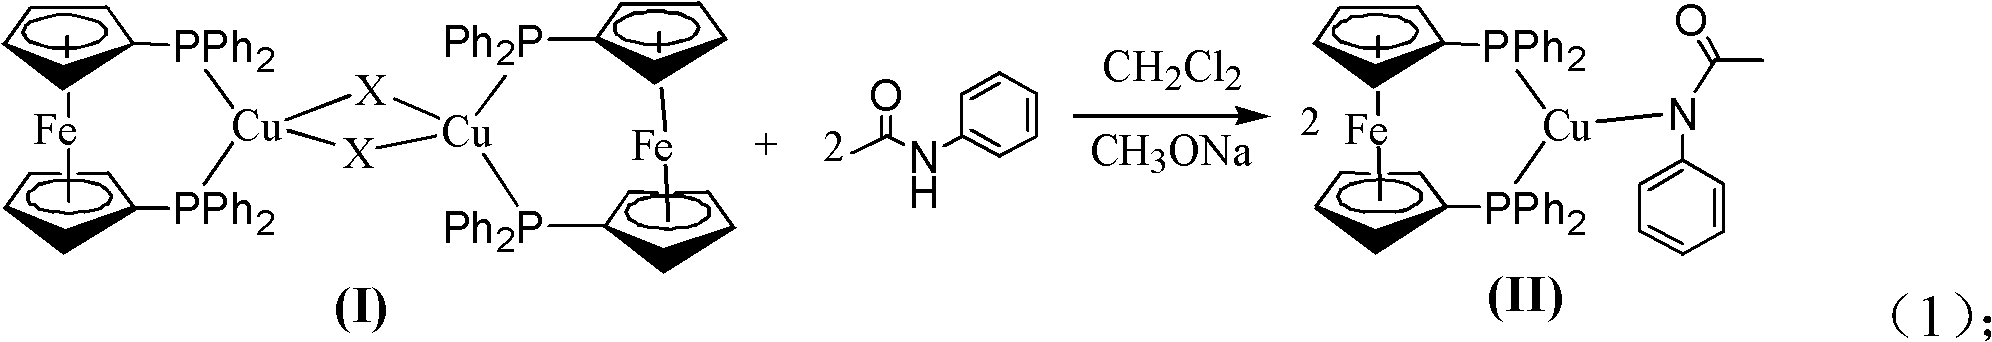 Method for preparing phenylamide compound